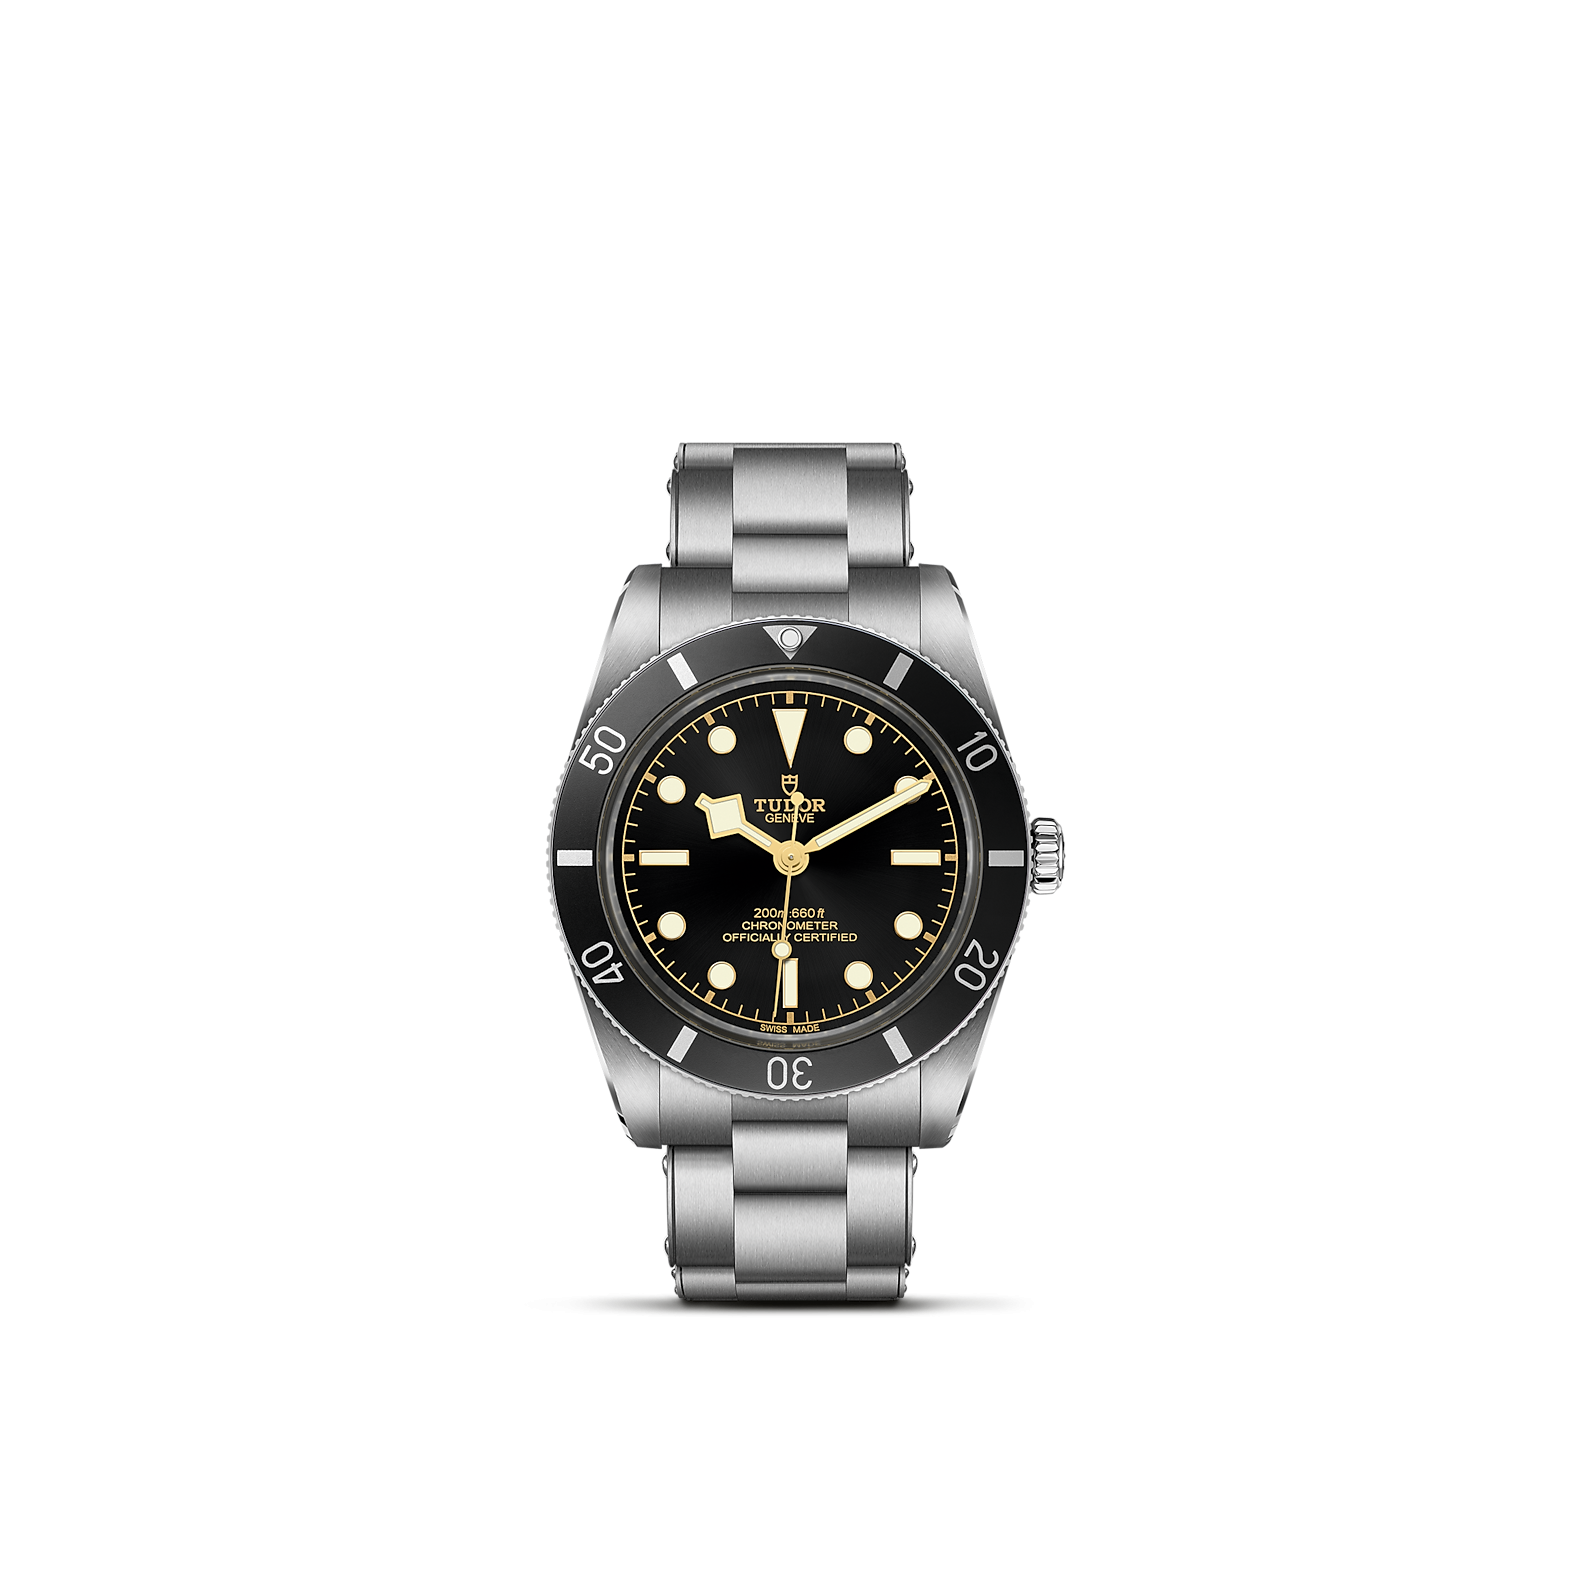 Tudor Black Bay 54 watch